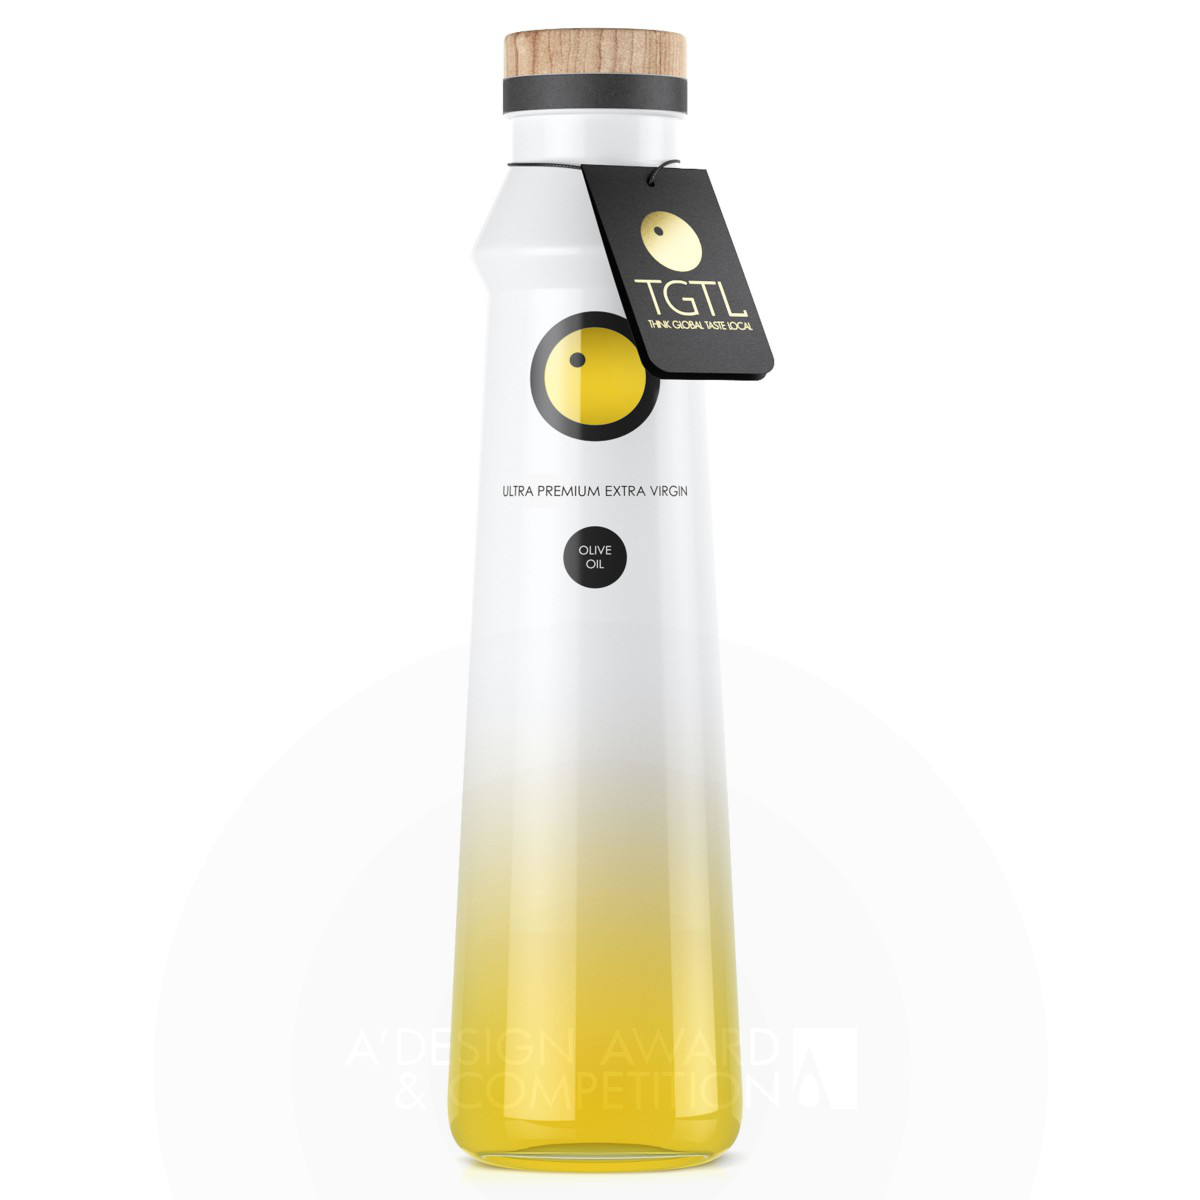 TGTL - EXTRA VIRGIN OLIVE OIL BOTTLE <b>Olive oil bottle